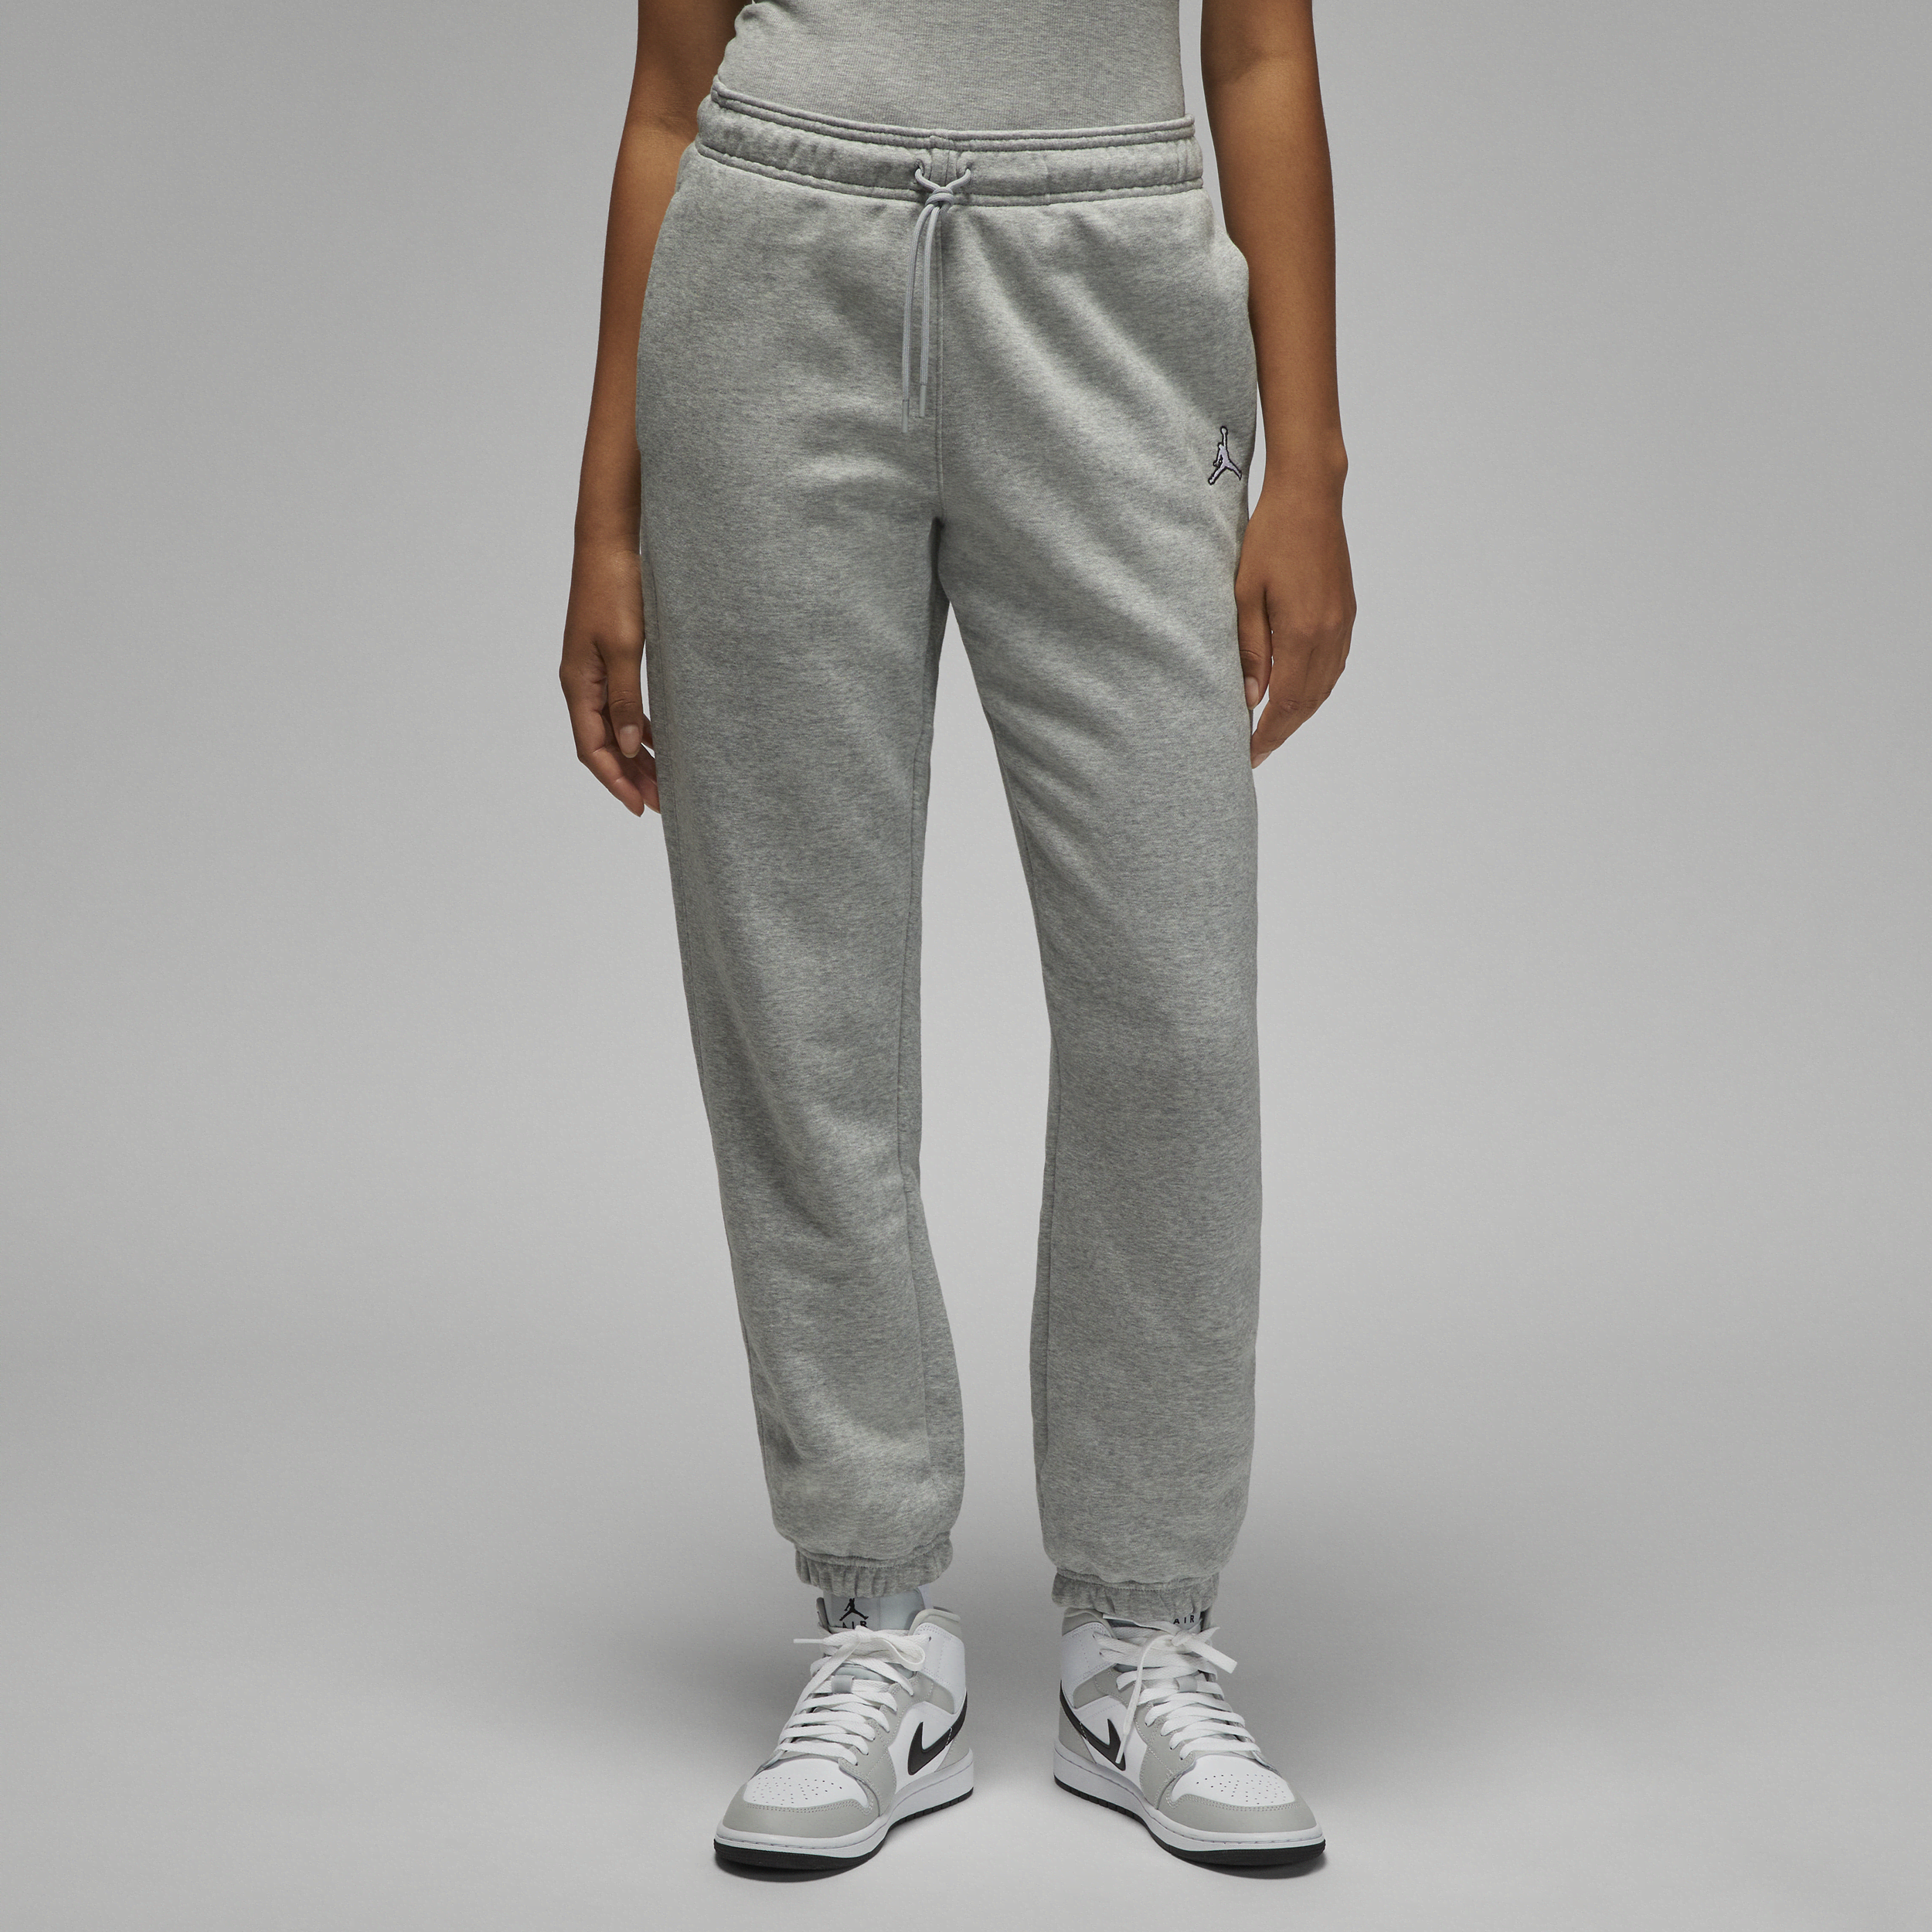 Jordan Brooklyn Pantalón de tejido Fleece - Mujer - Gris